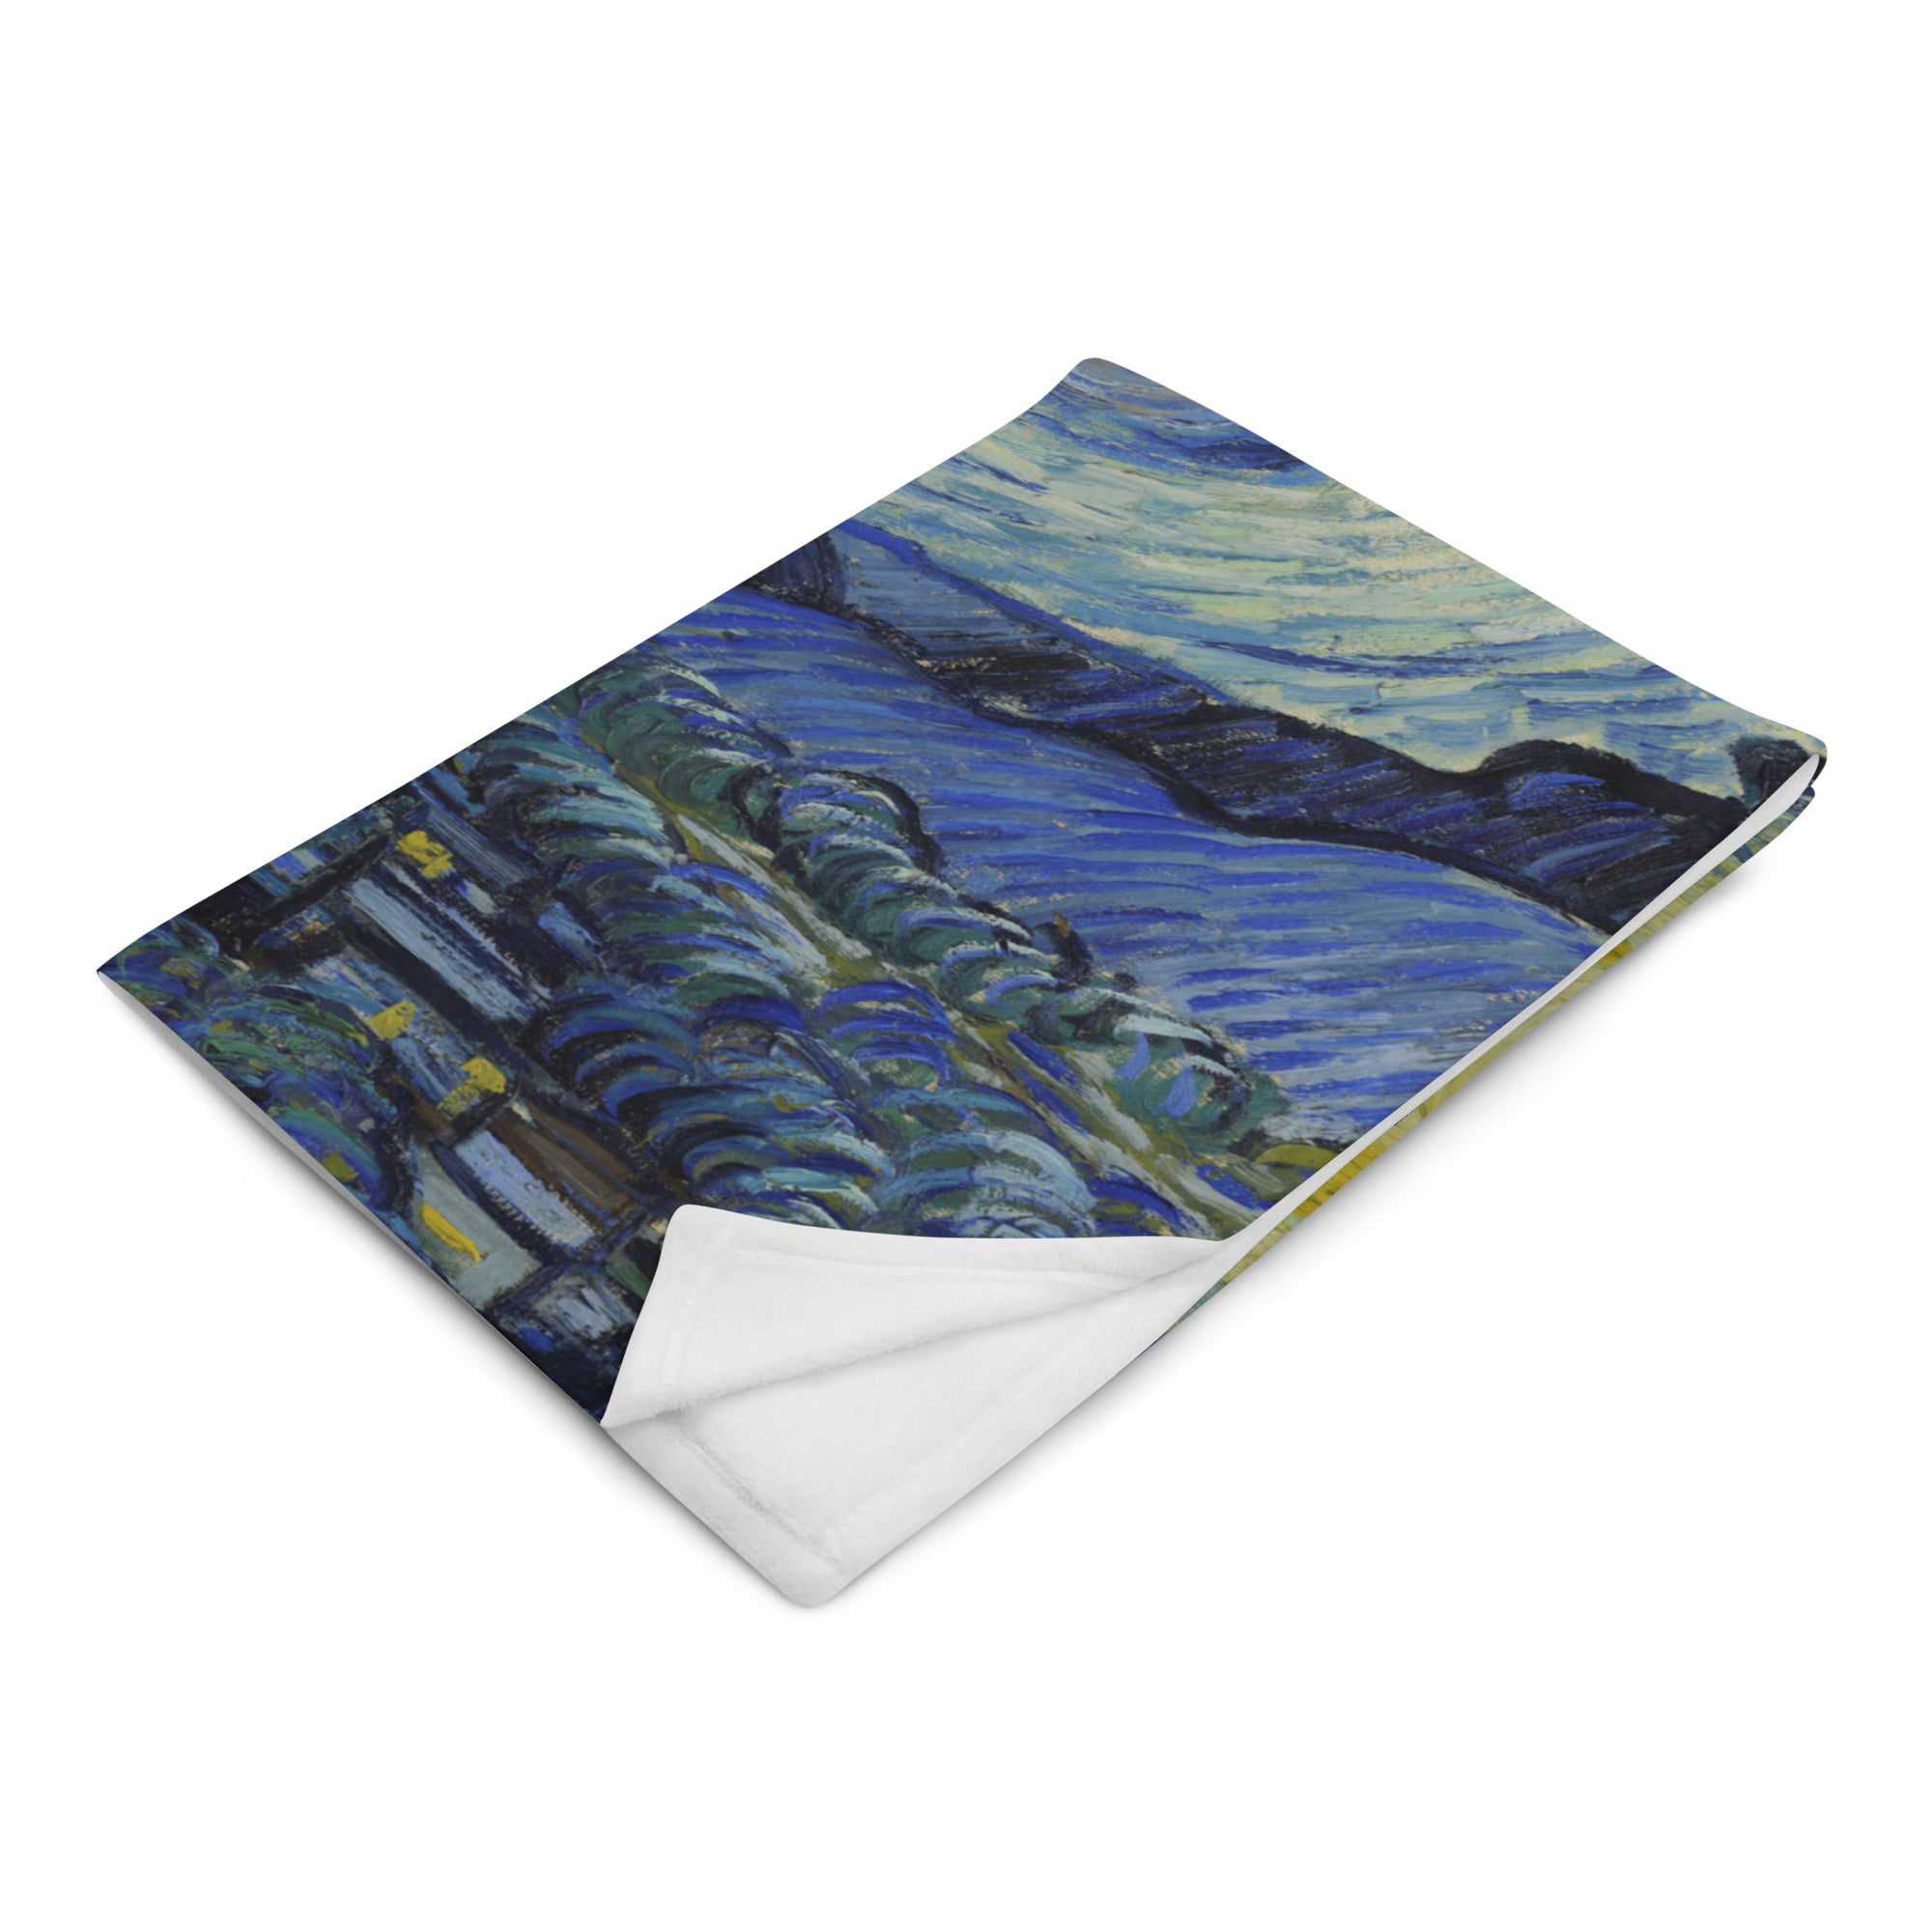 Vincent van Gogh 'Starry Night' Famous Painting Throw Blanket | Premium Art Throw